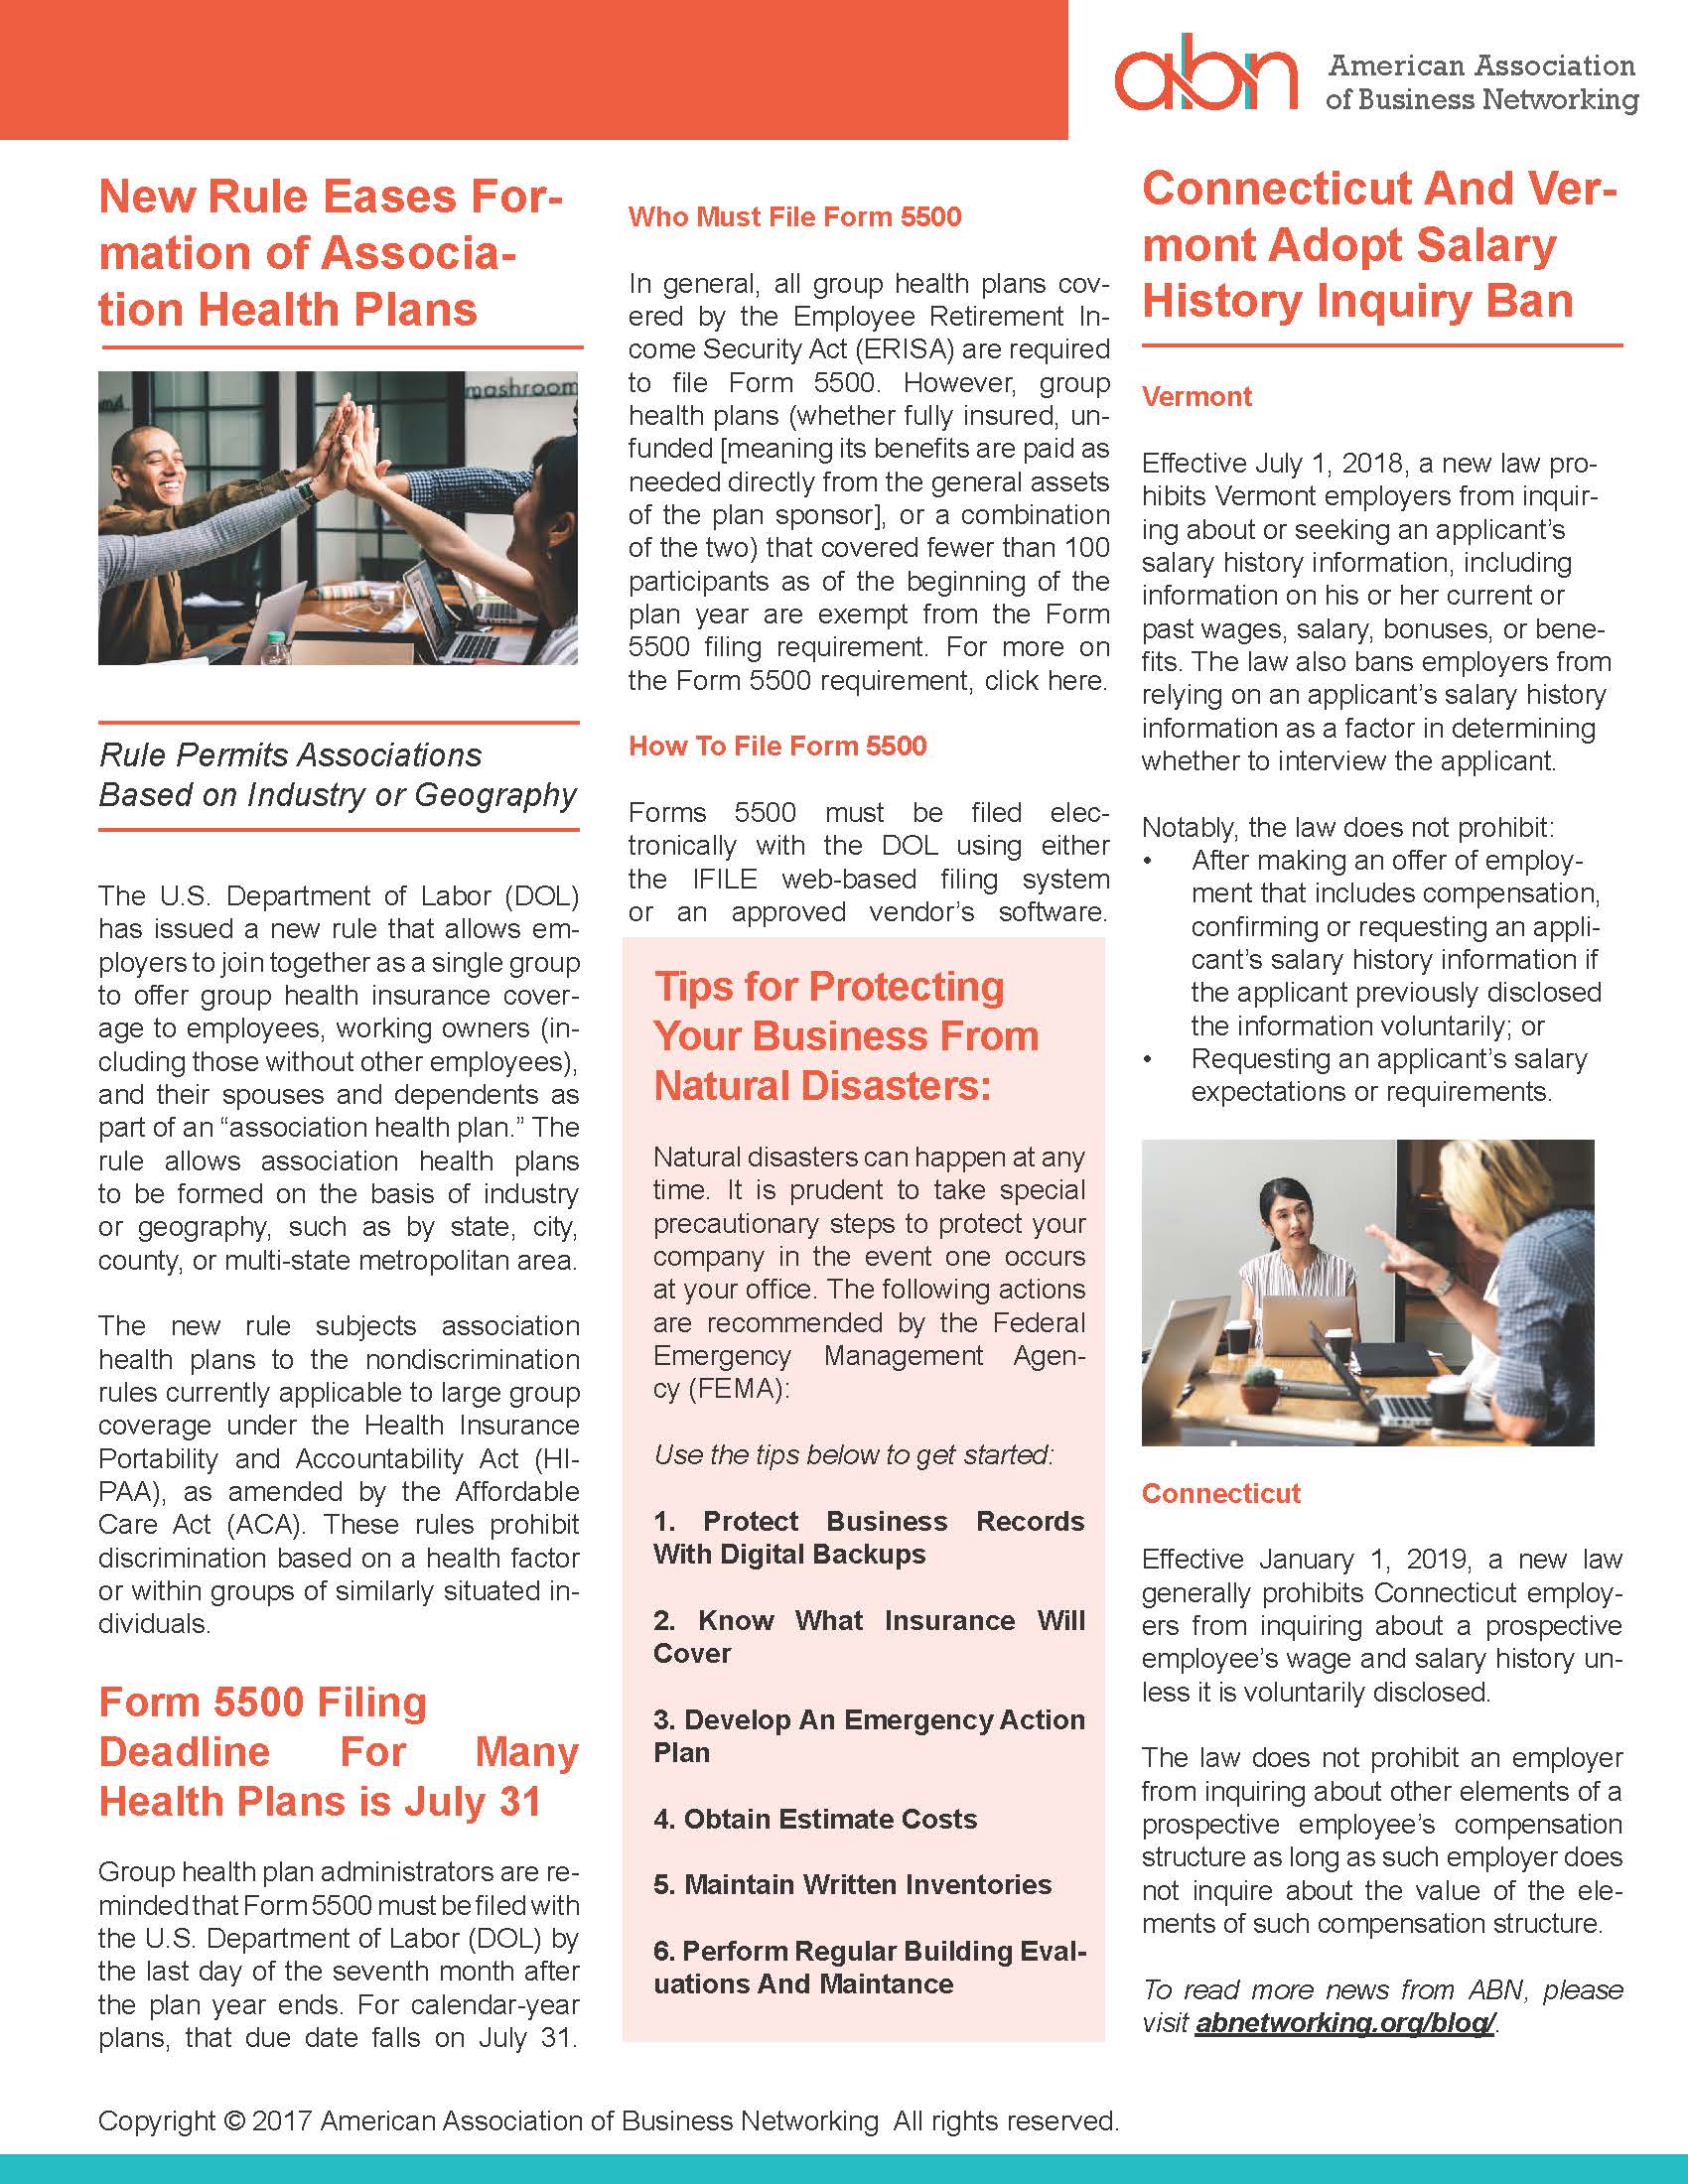 ABN Quarterly Newsletter July 2018 Volume 1 Issue 4